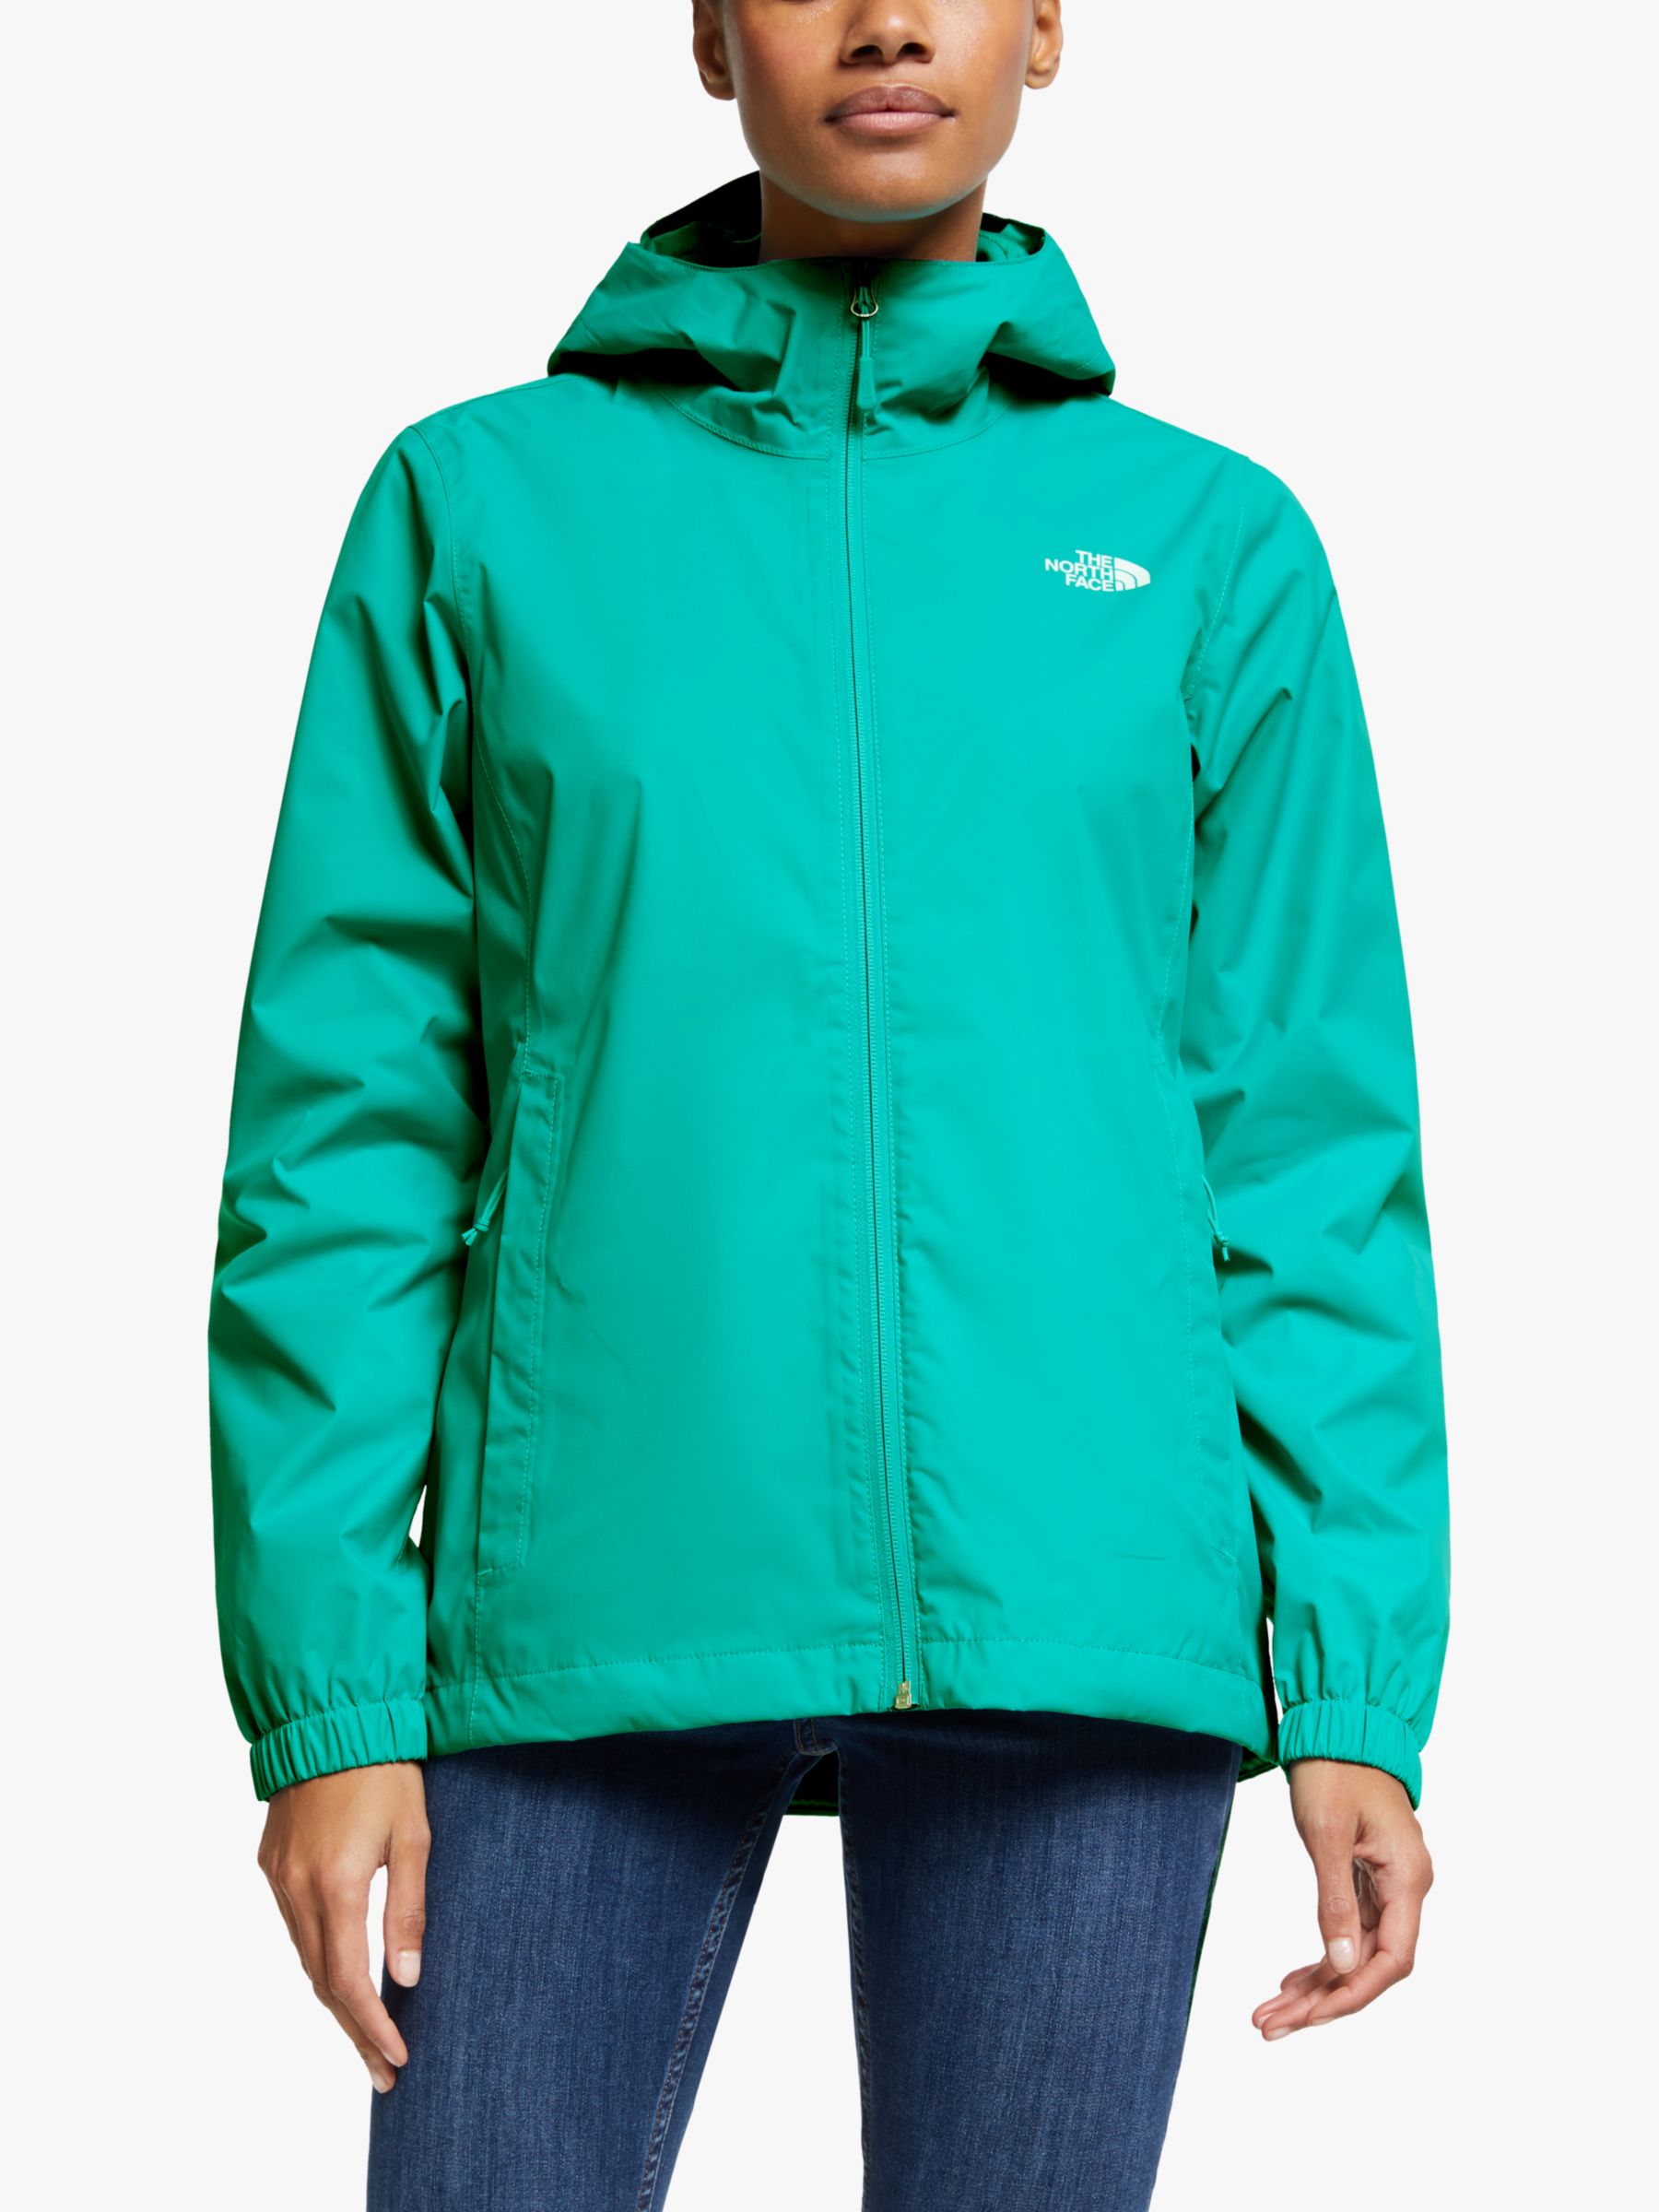 north face waterproof jacket green